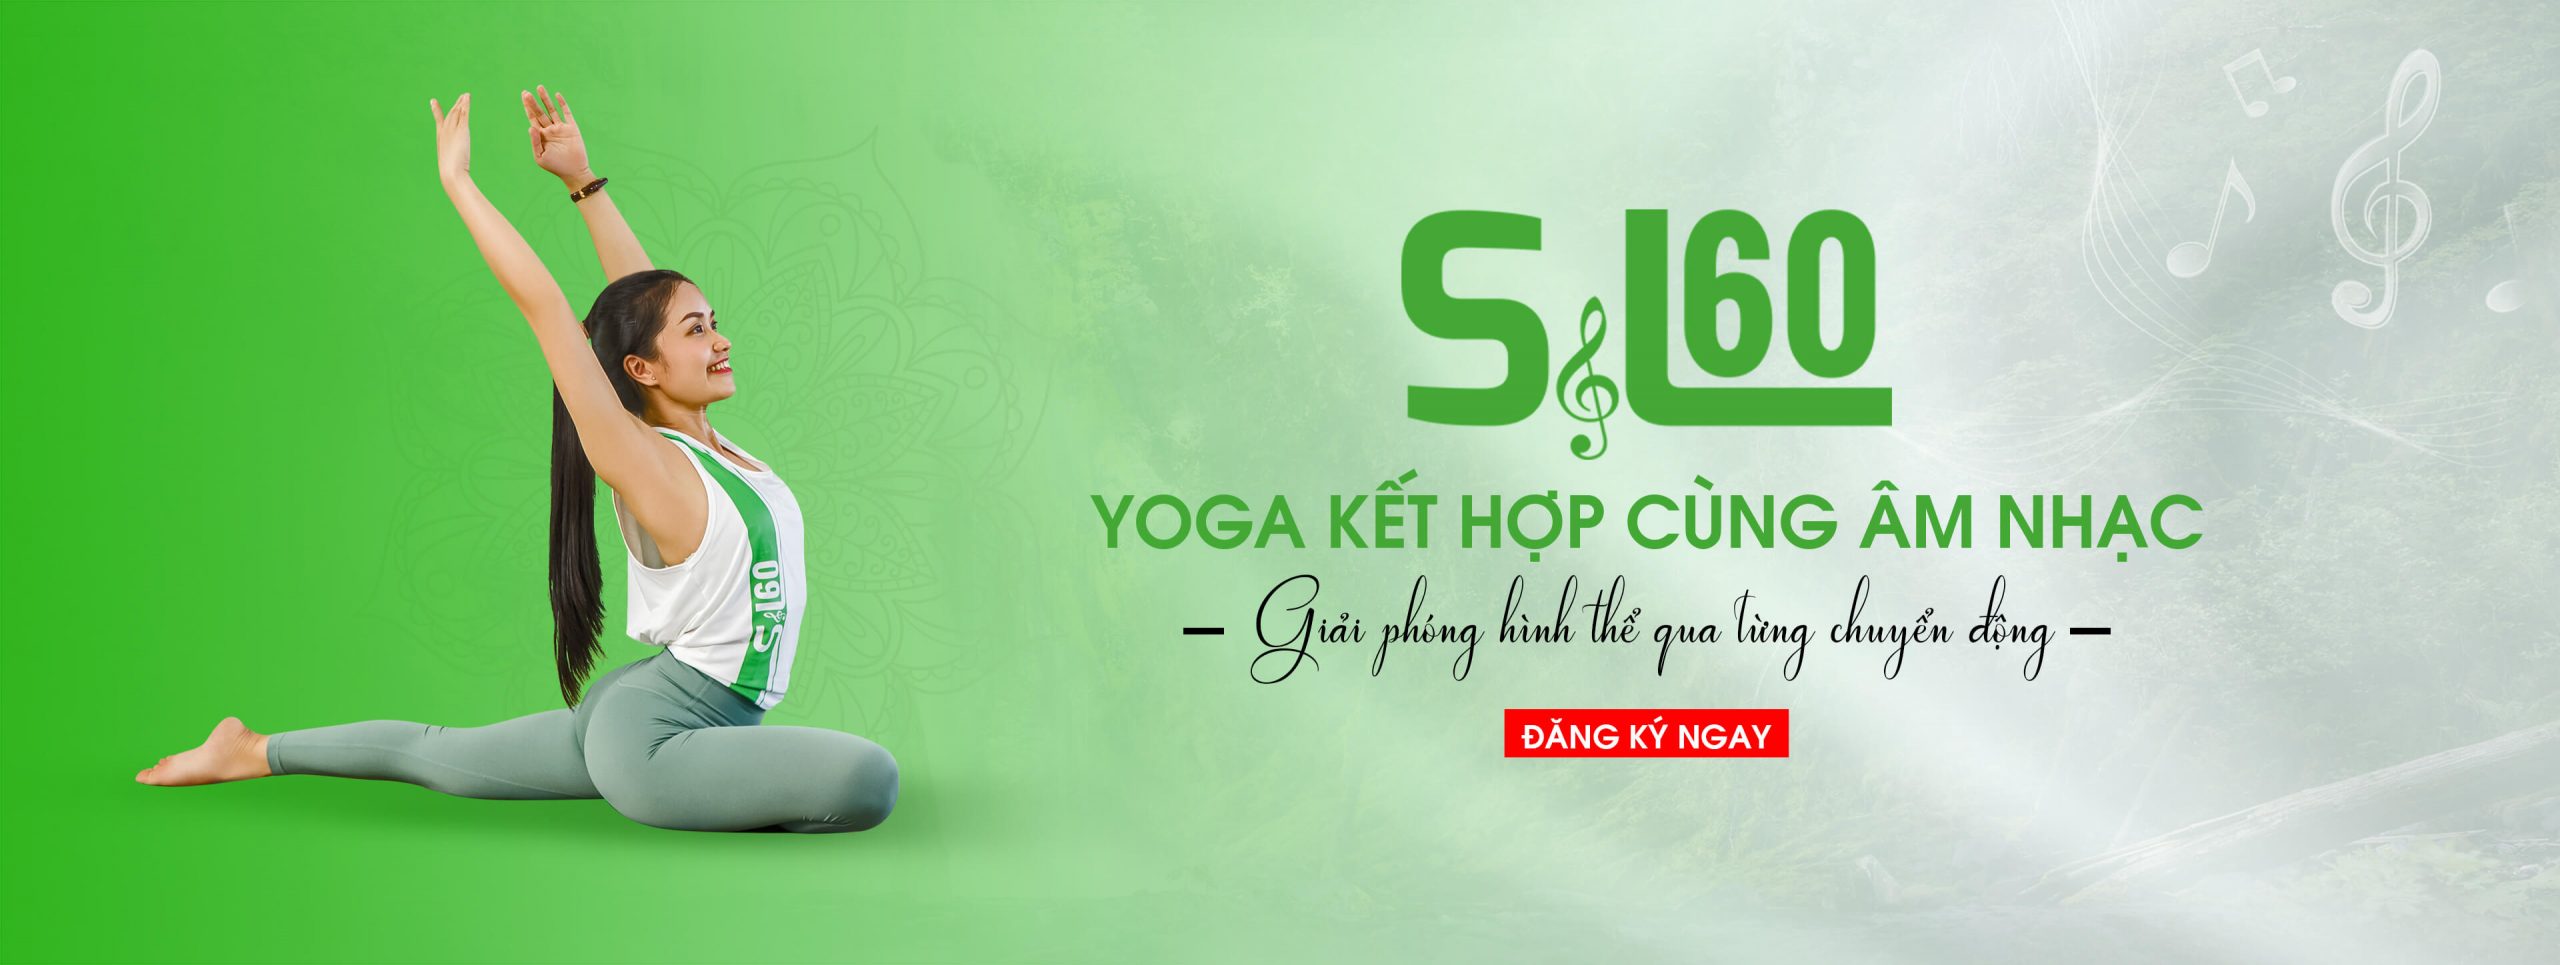 yoga-sol-60-banner (1)